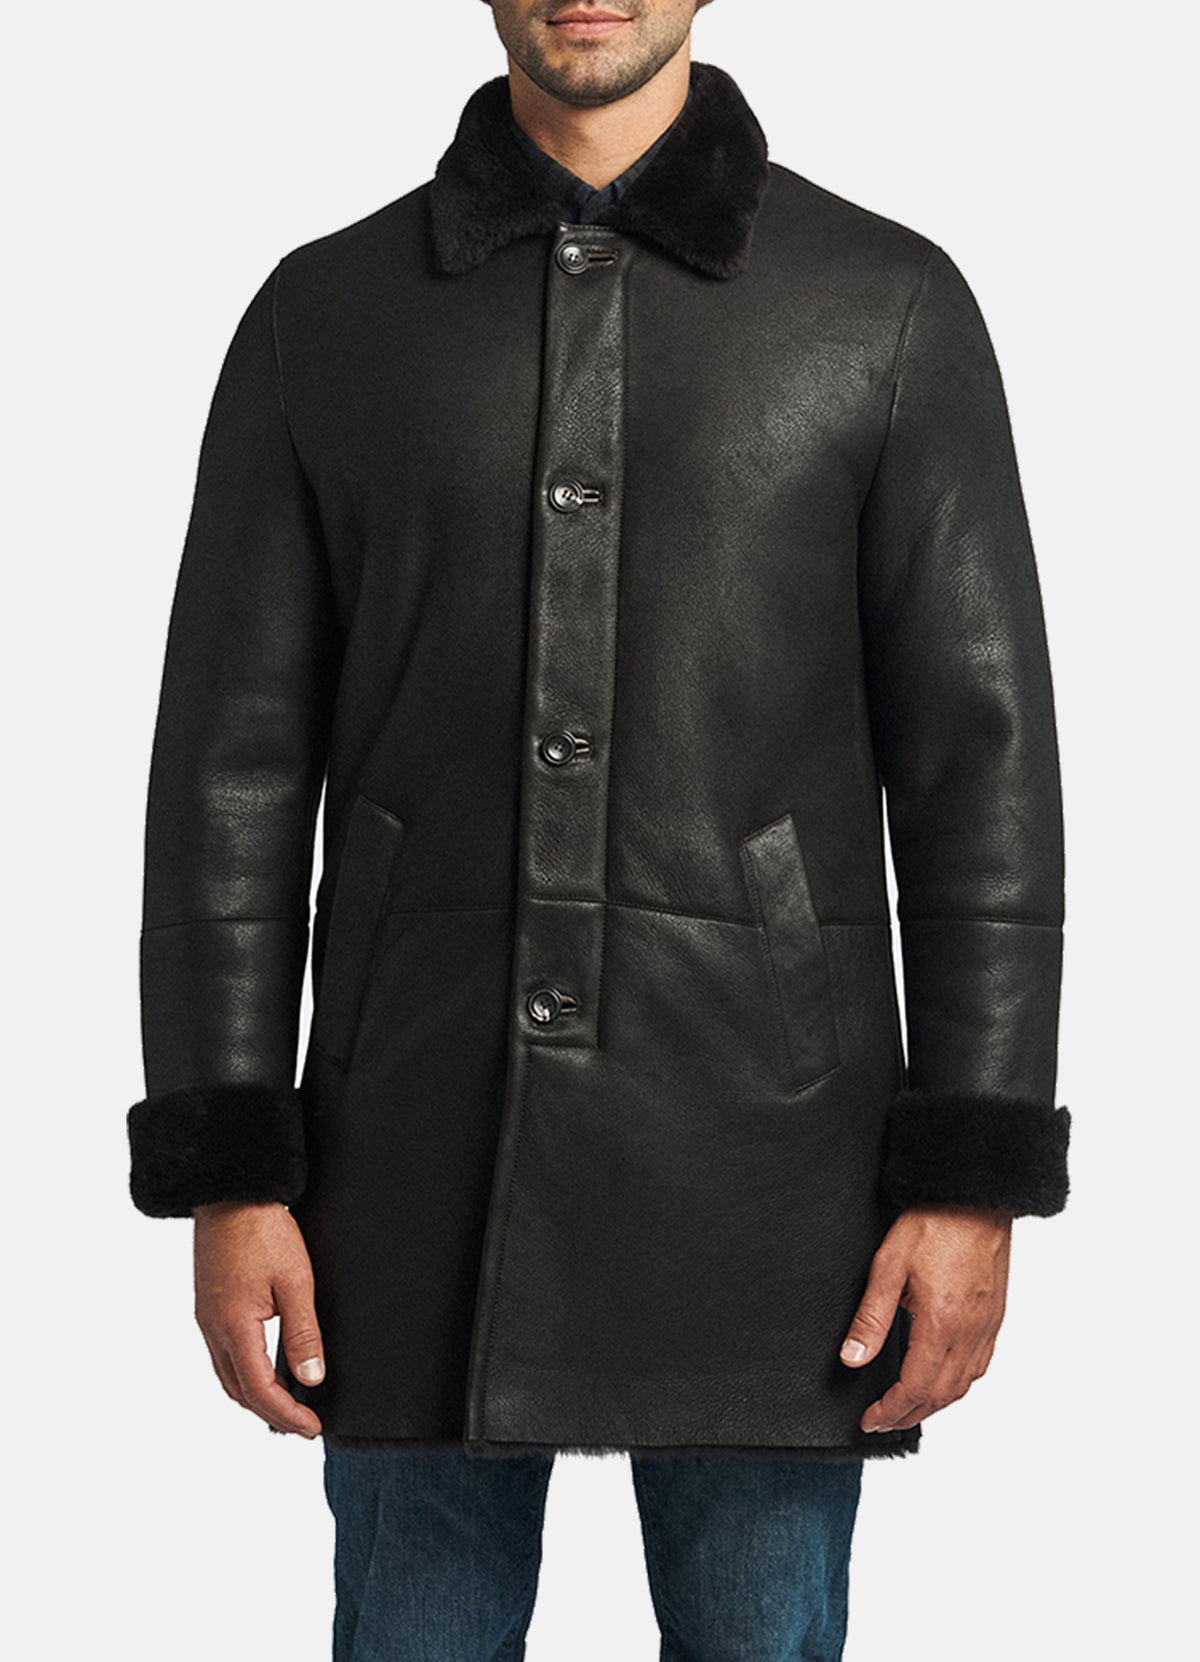 Mens Authentic Black Shearling Leather Coat | Elite Jacket